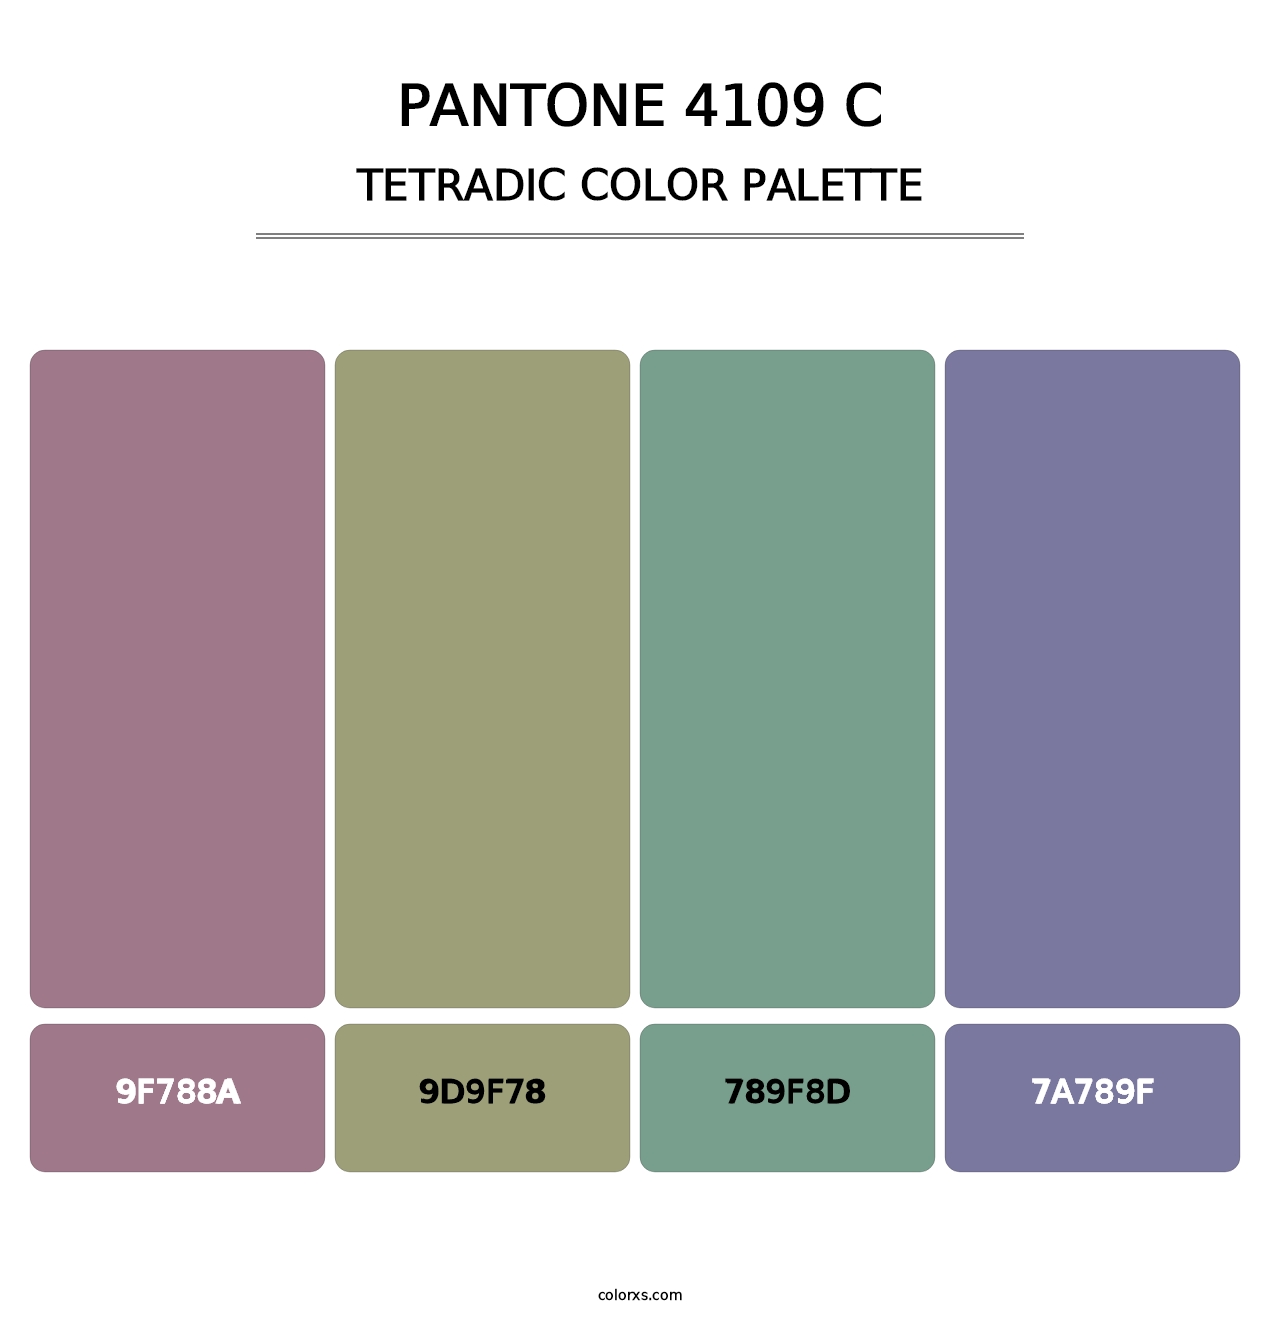 PANTONE 4109 C - Tetradic Color Palette